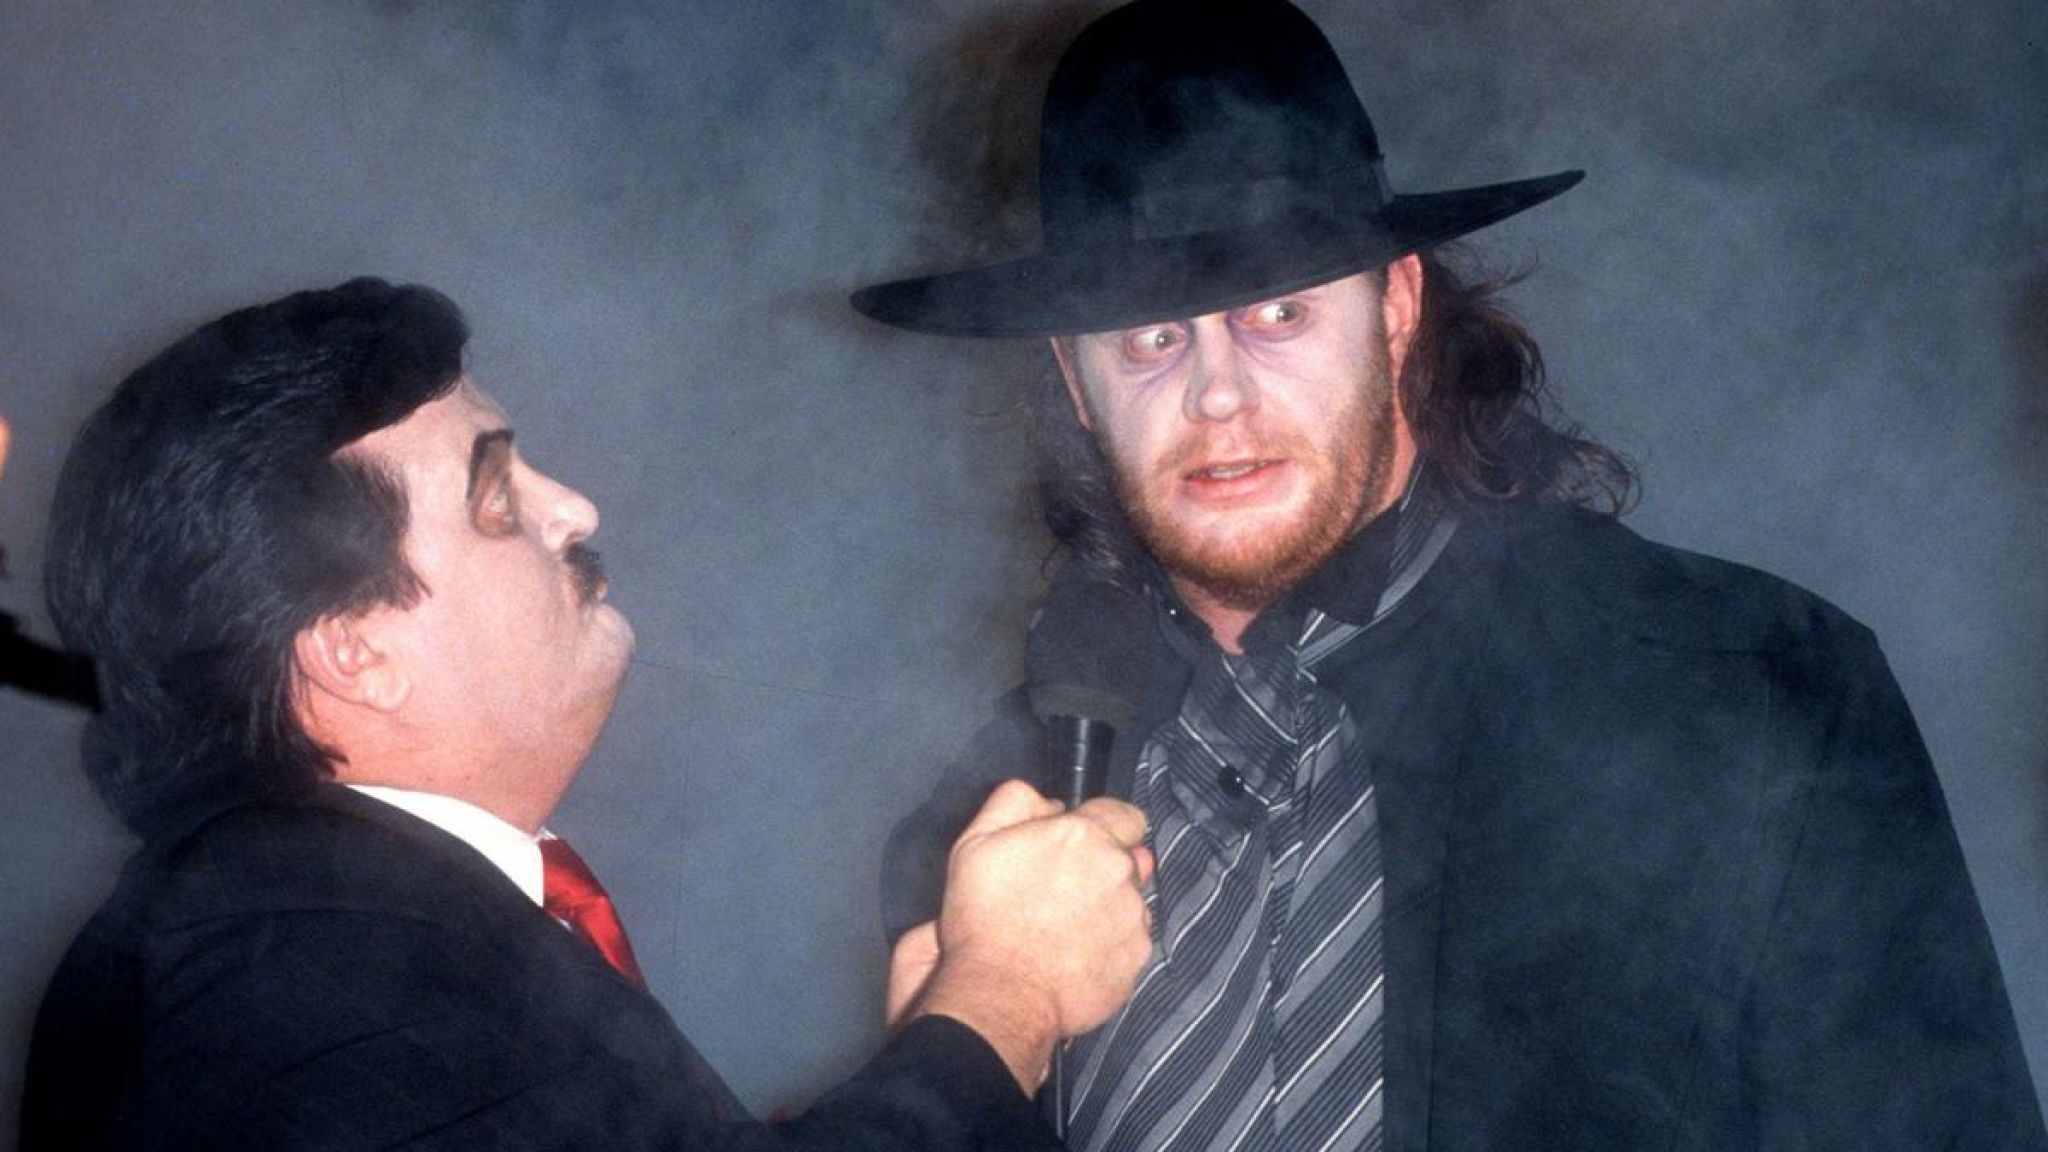 The Undertaker Retires